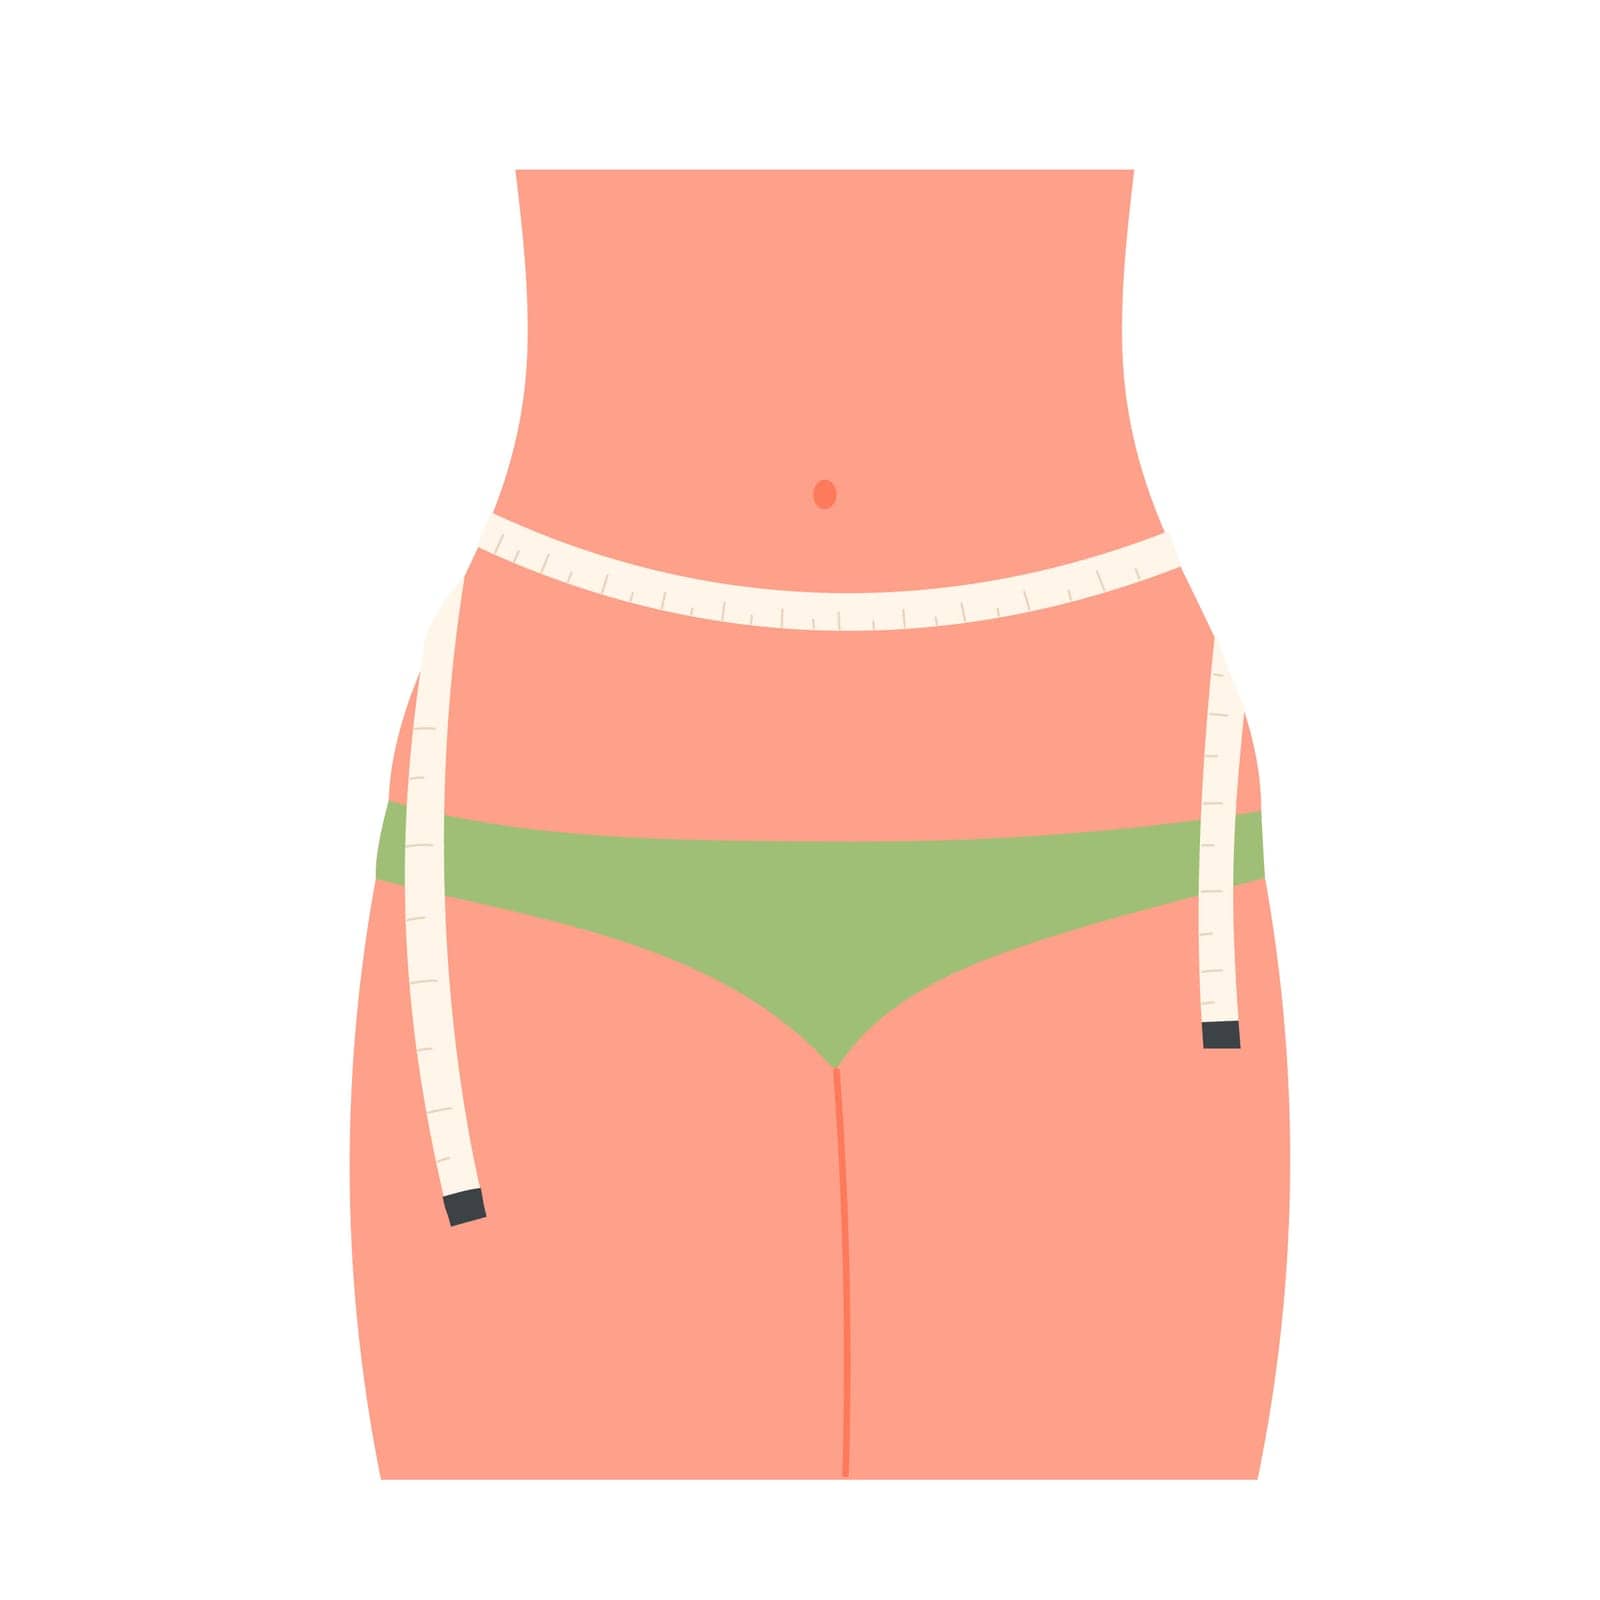 Slim woman waist with measuring tape. Skinny body, weight loss program cartoon vector illustration